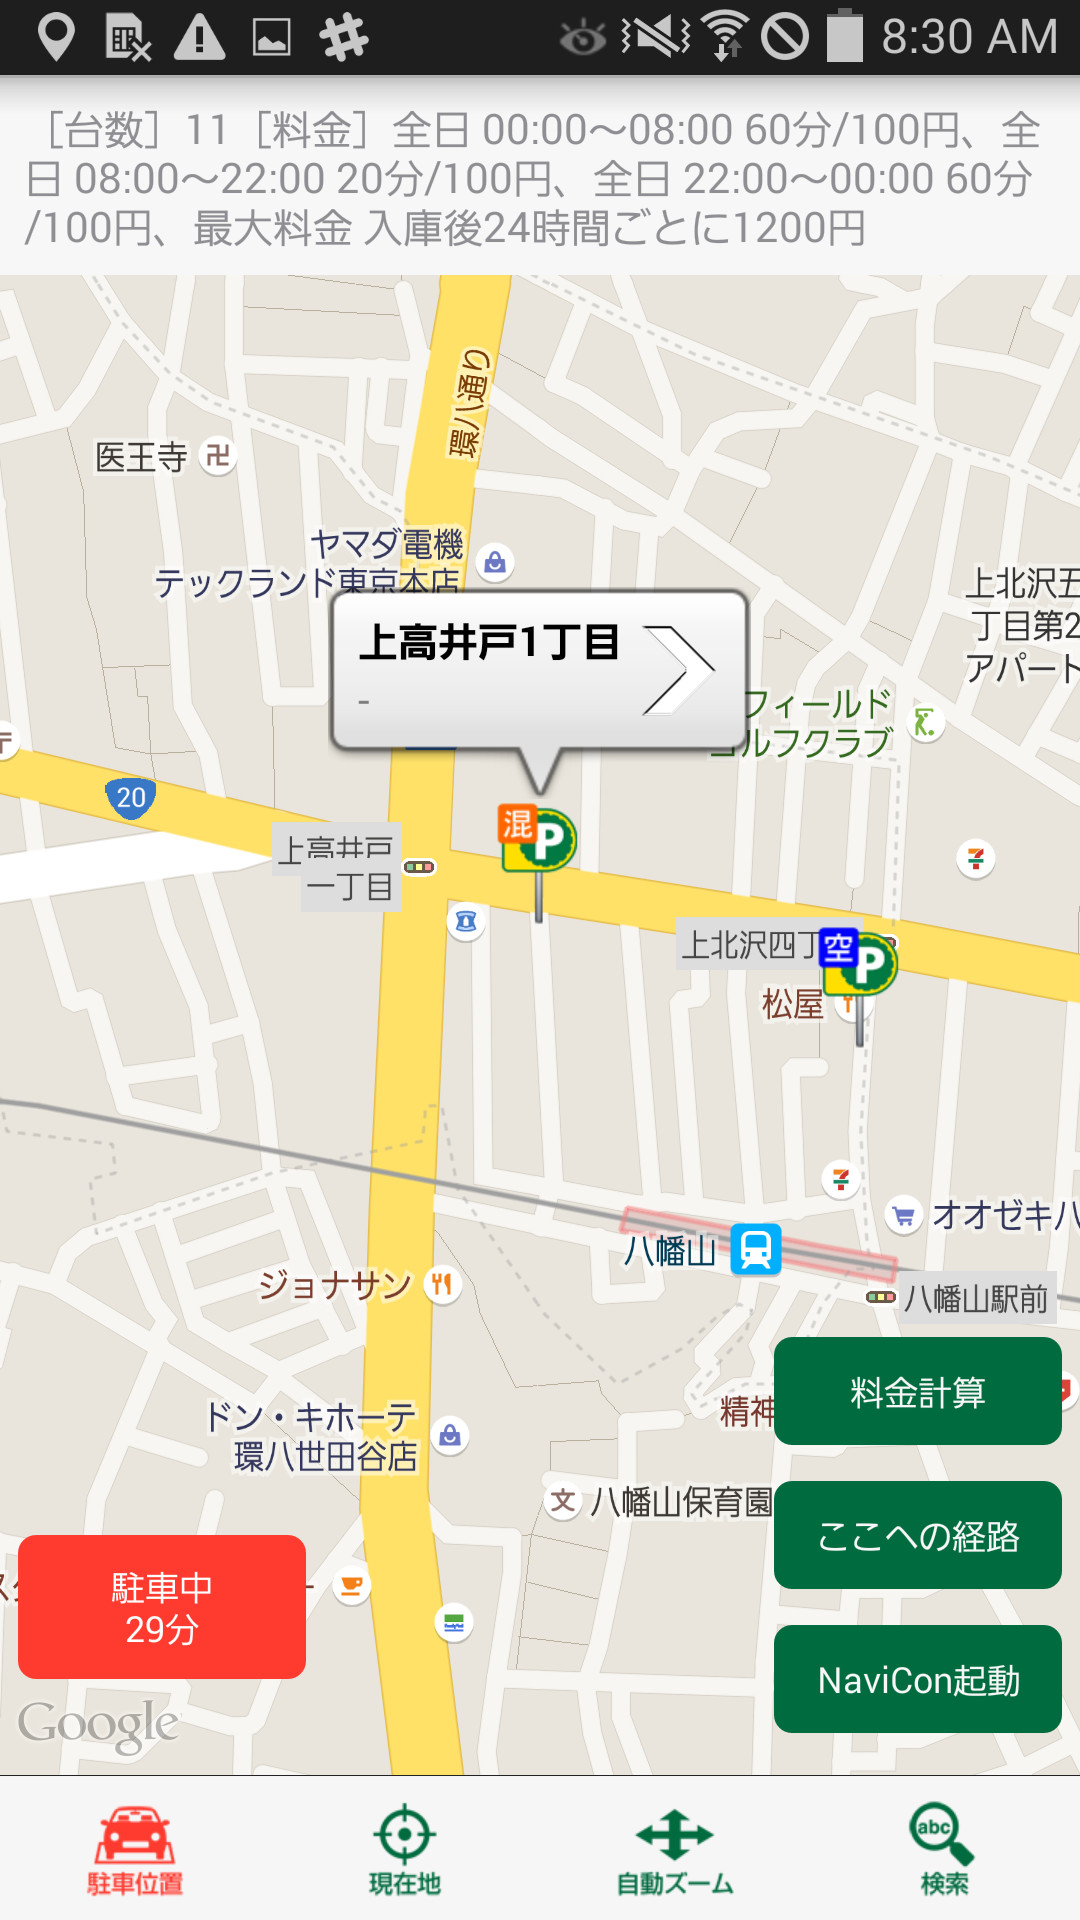 Android application 三井のリパーク駐車場検索 screenshort